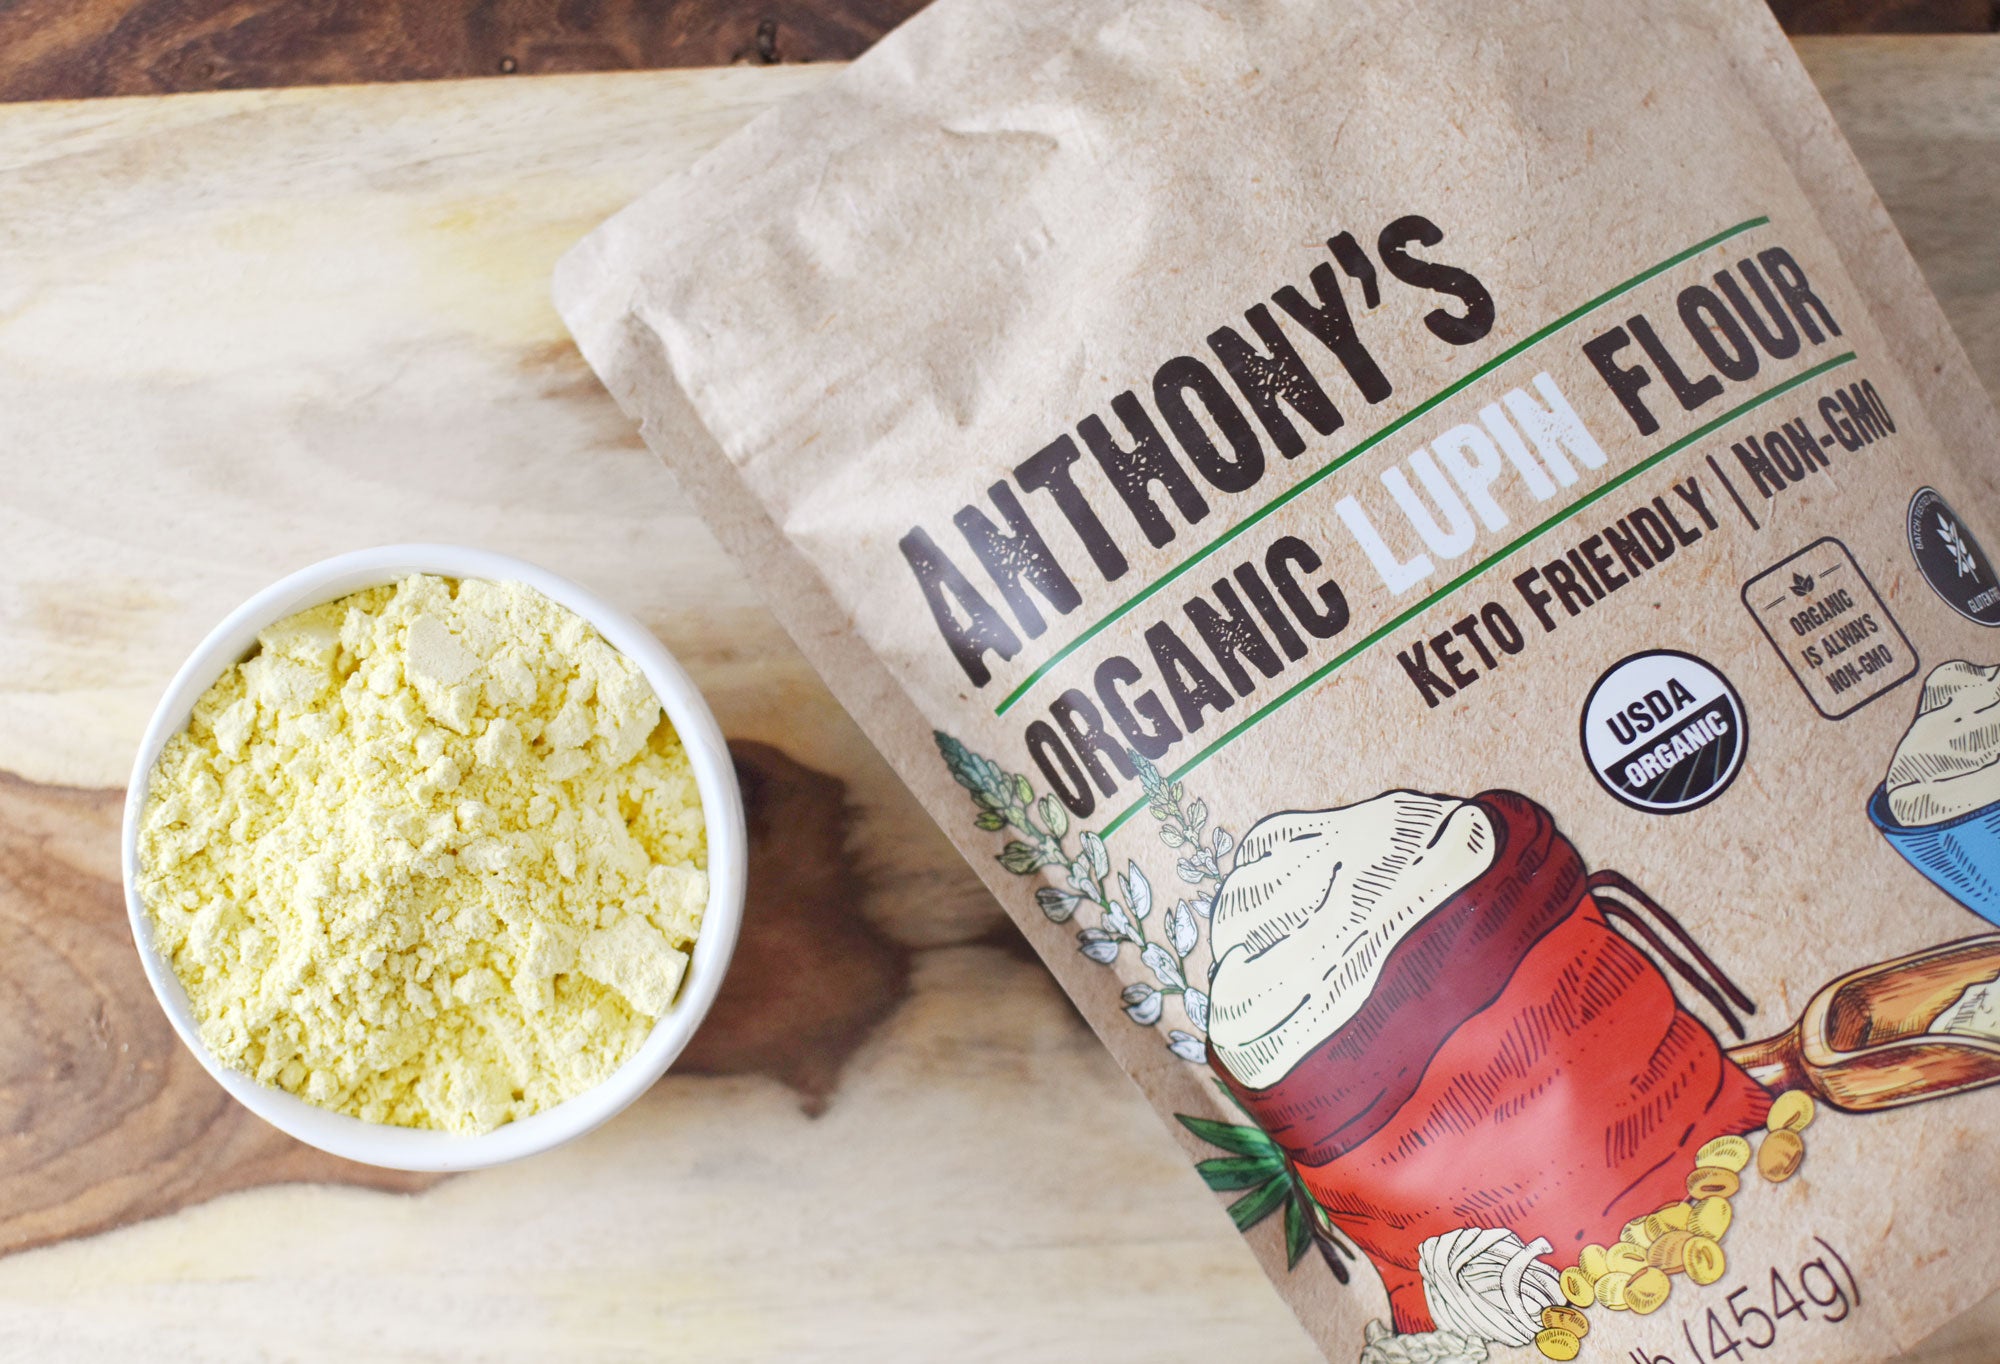 Organic Lupin Flour: Gluten Free & Keto Friendly